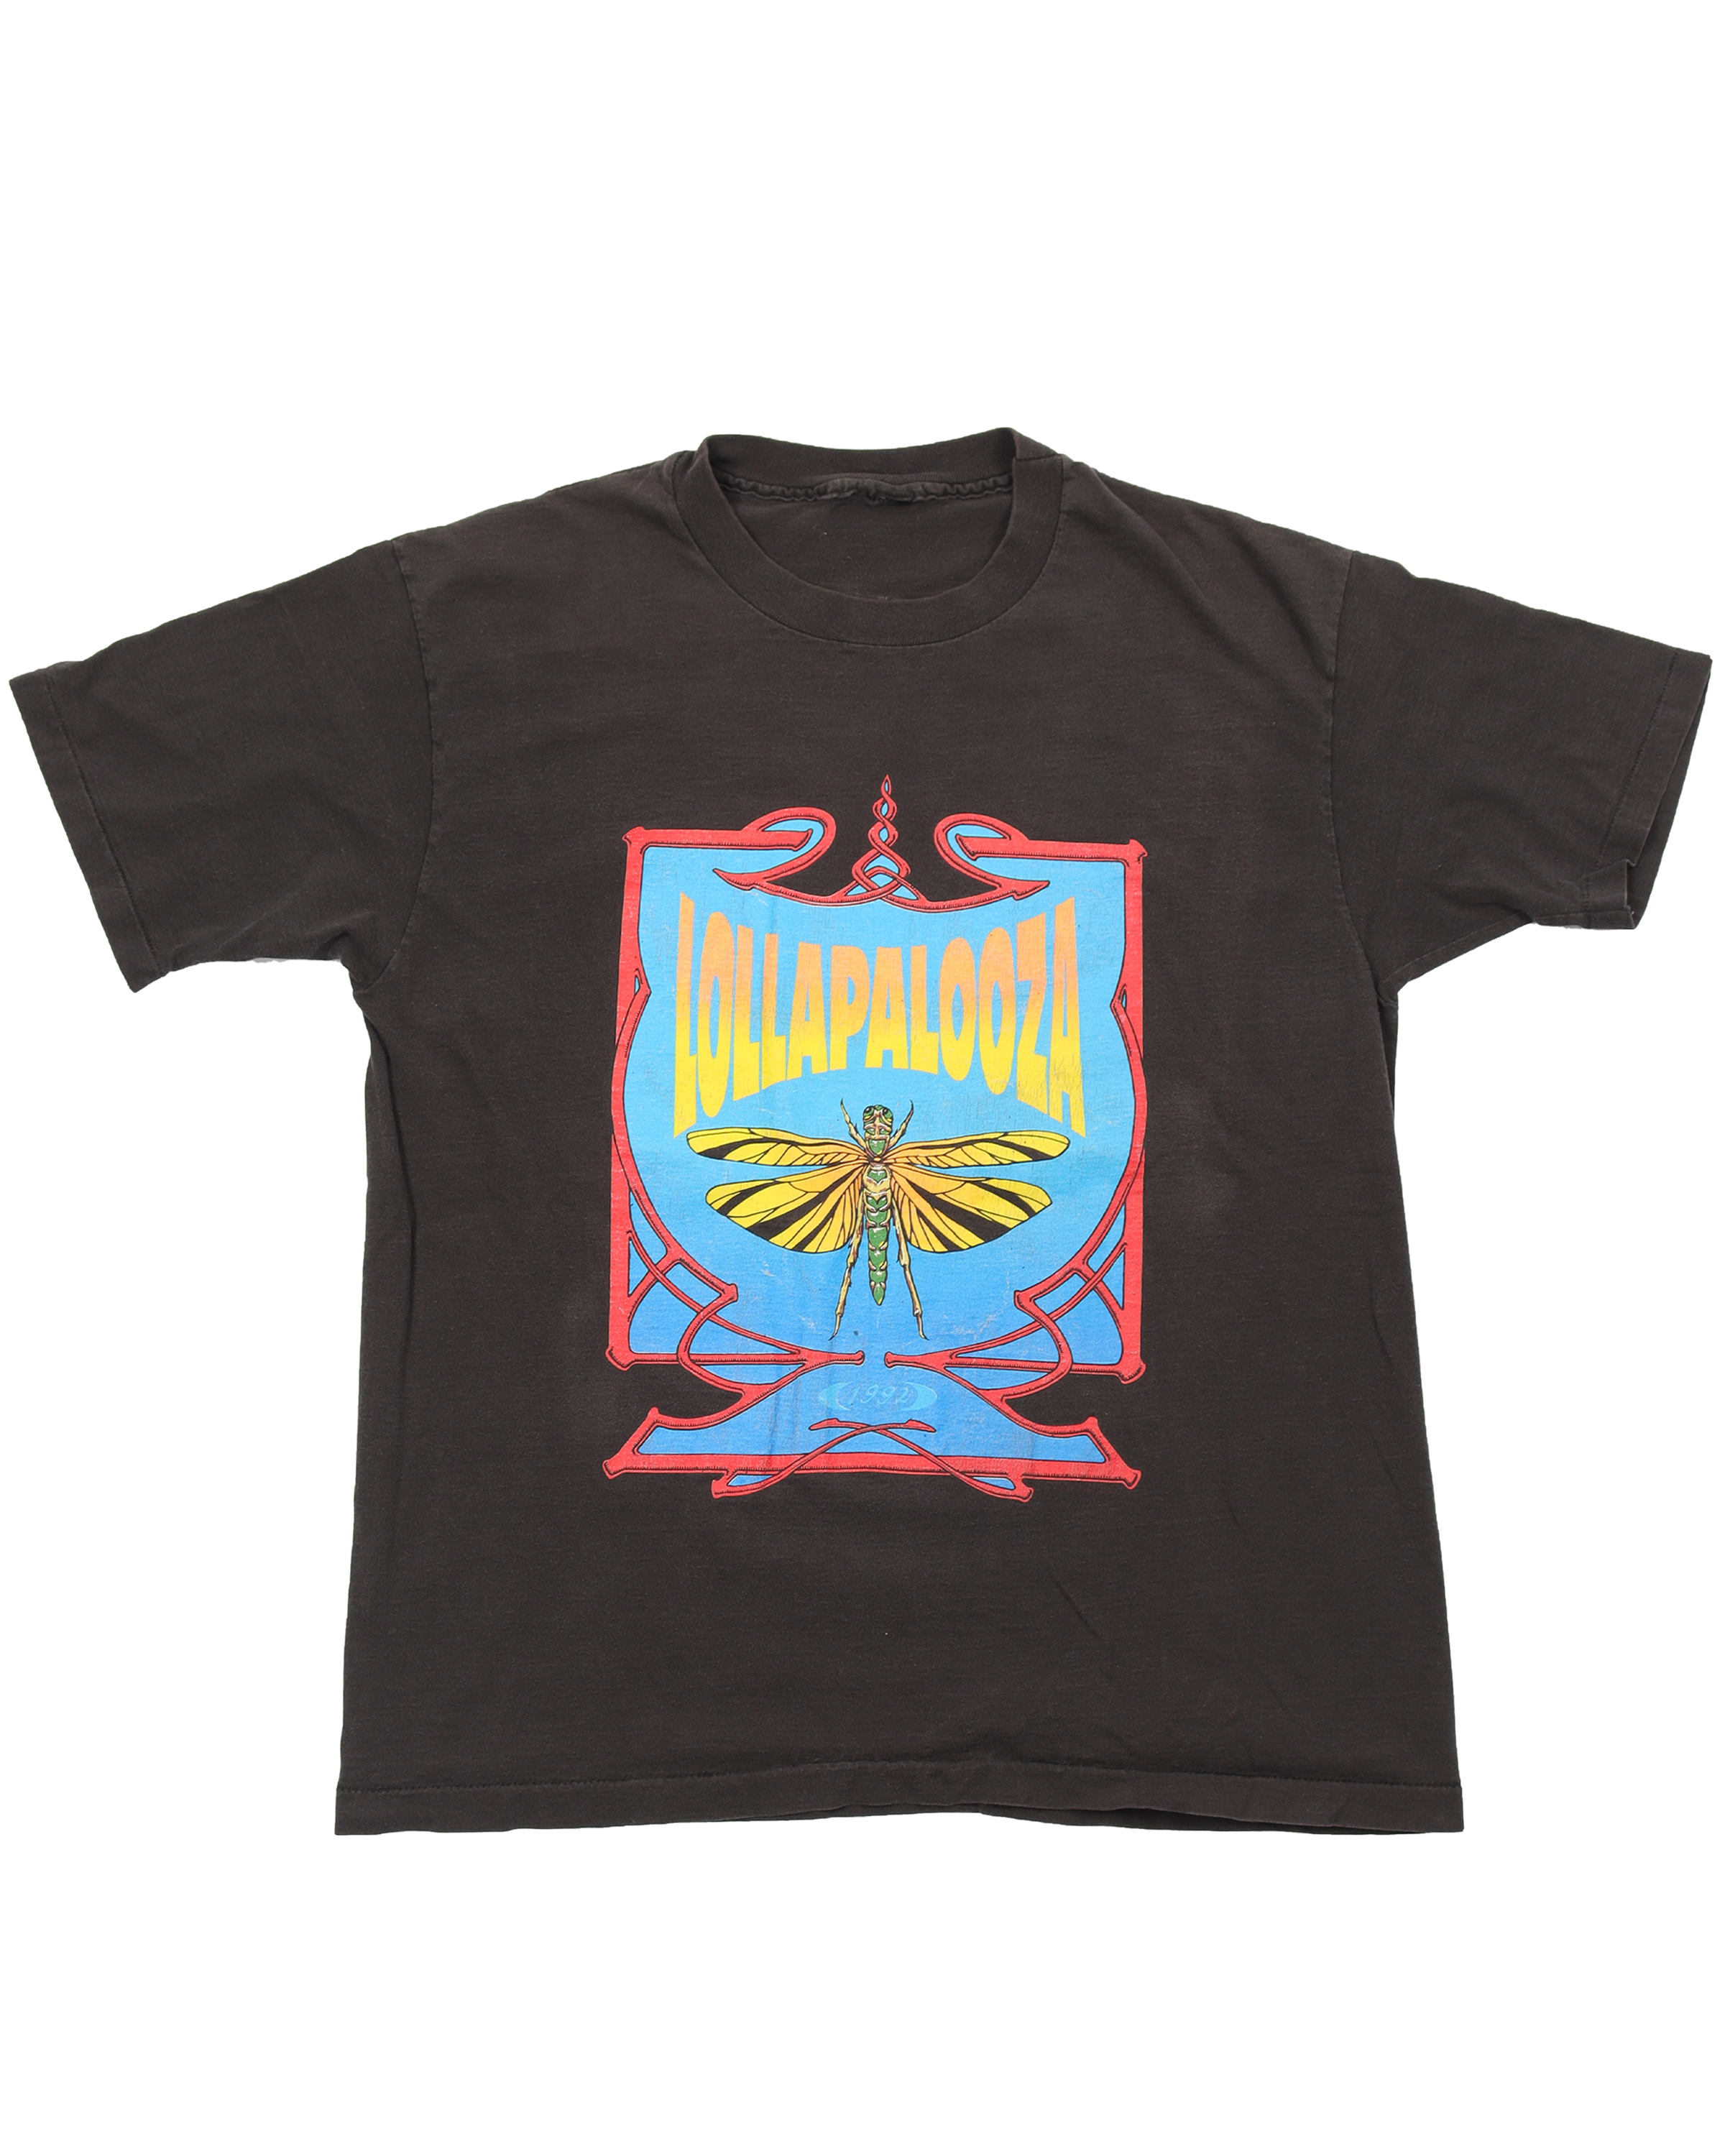 Vintage 1992 Lollapalooza T-Shirt